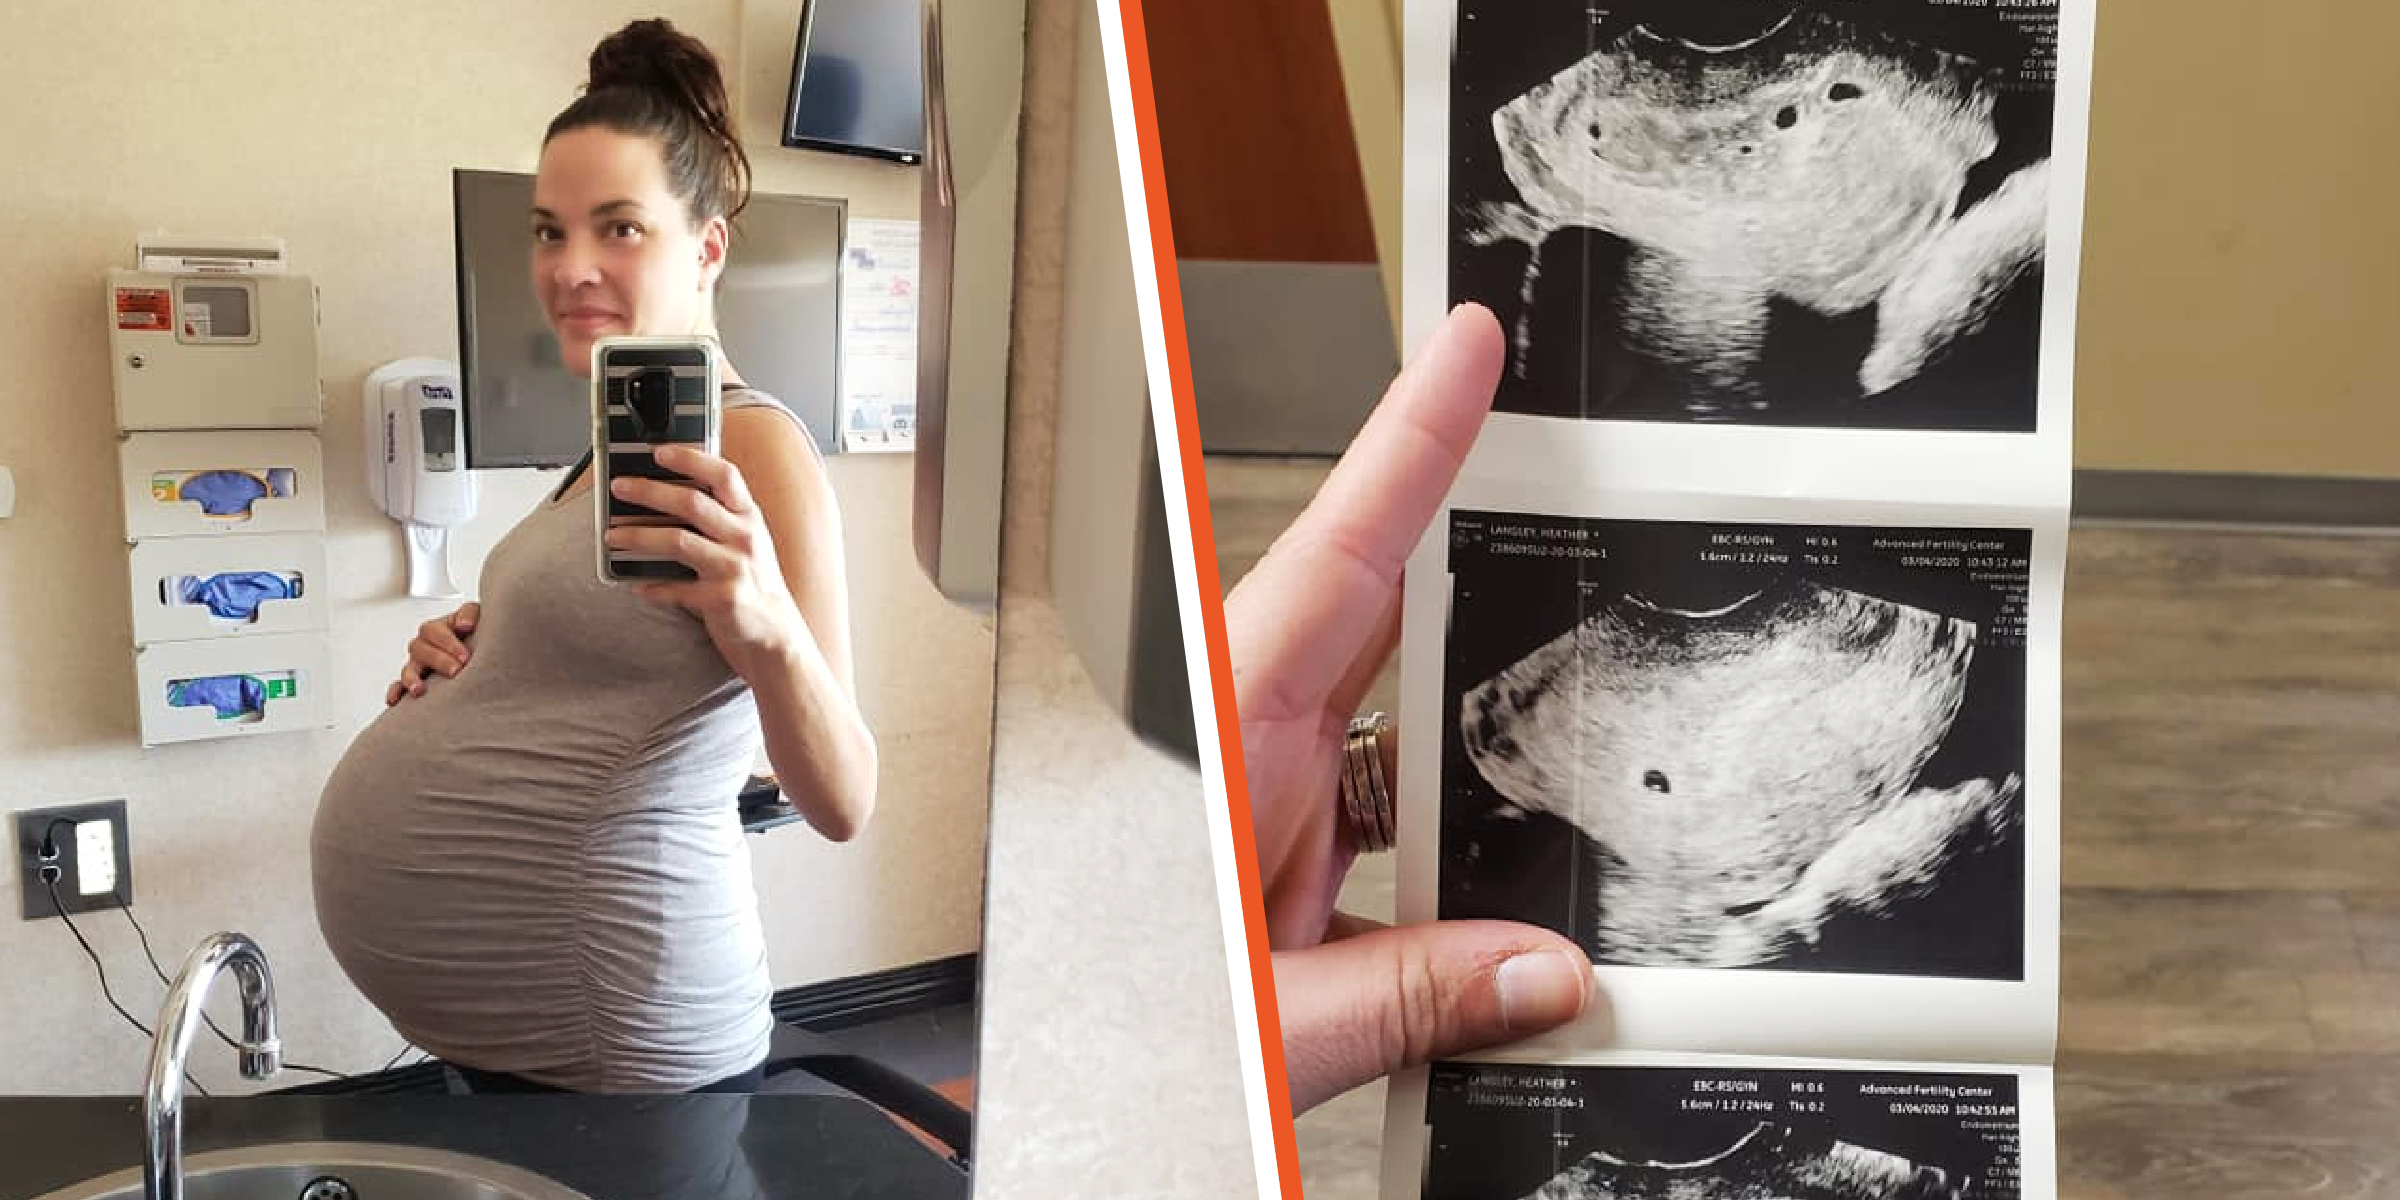 Heather Langley | The ultrasound scan | Source: facebook.com/HLangley03